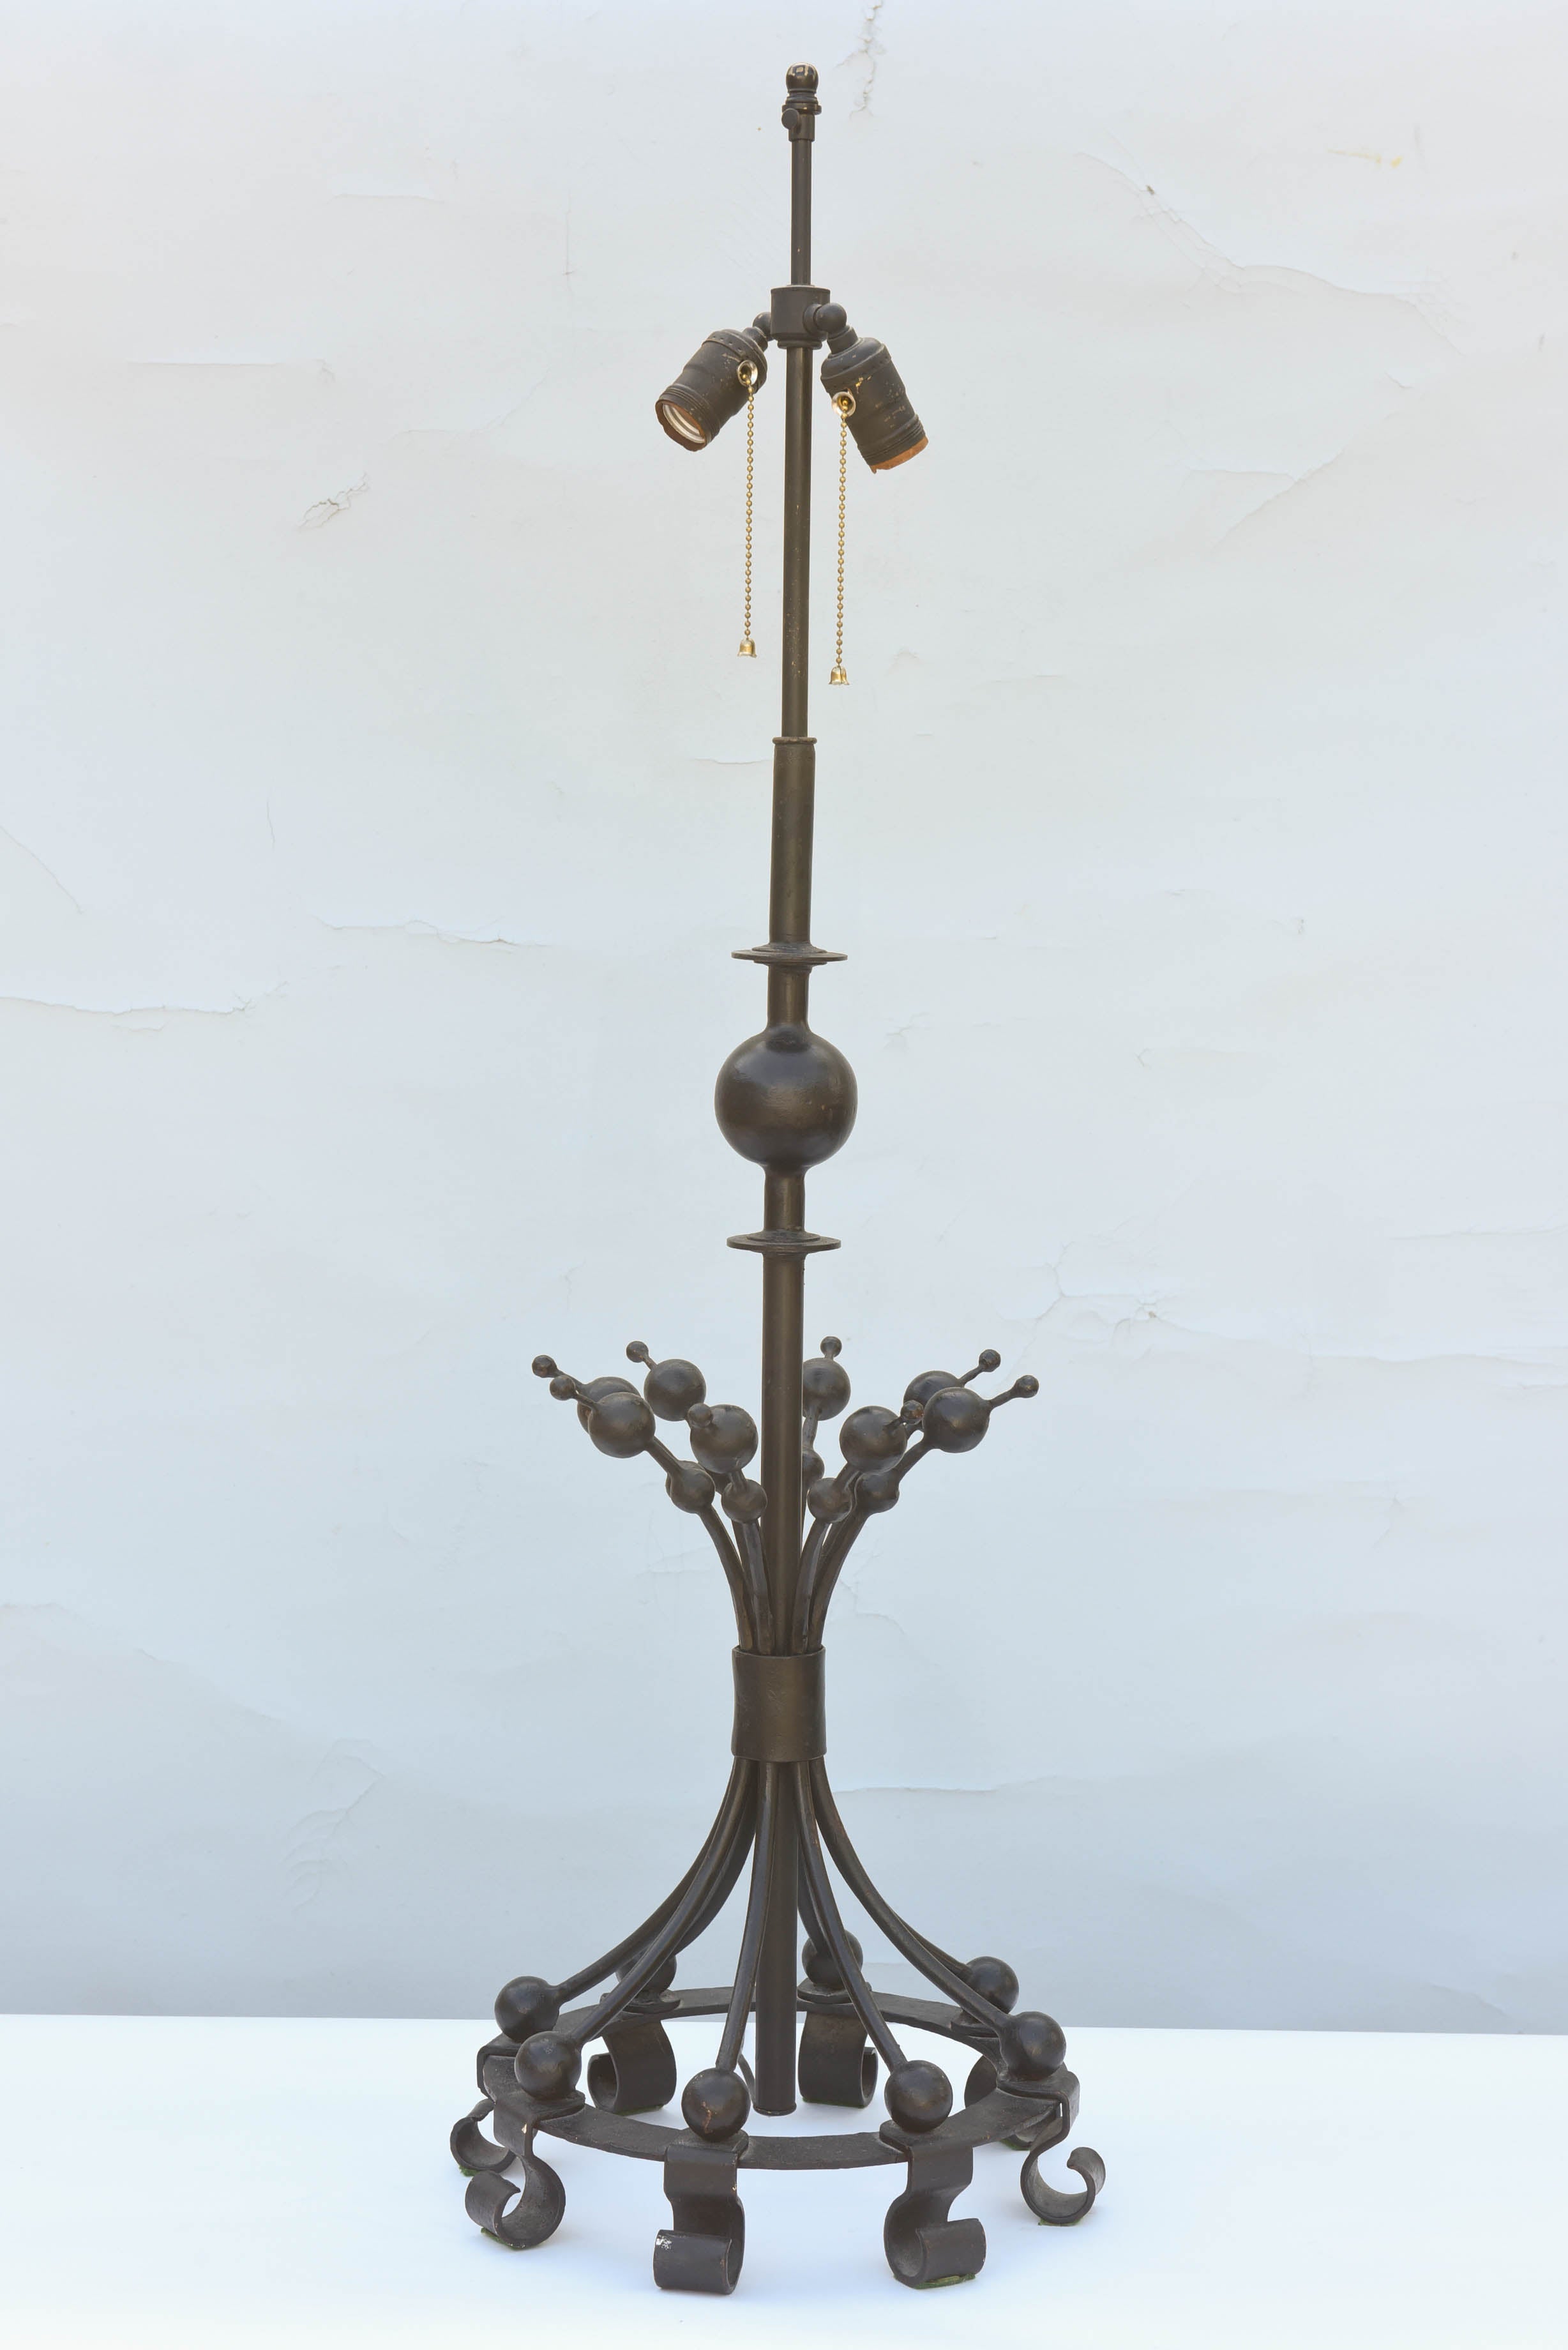 Single "Orbit" Lamp of Black Painted Iron